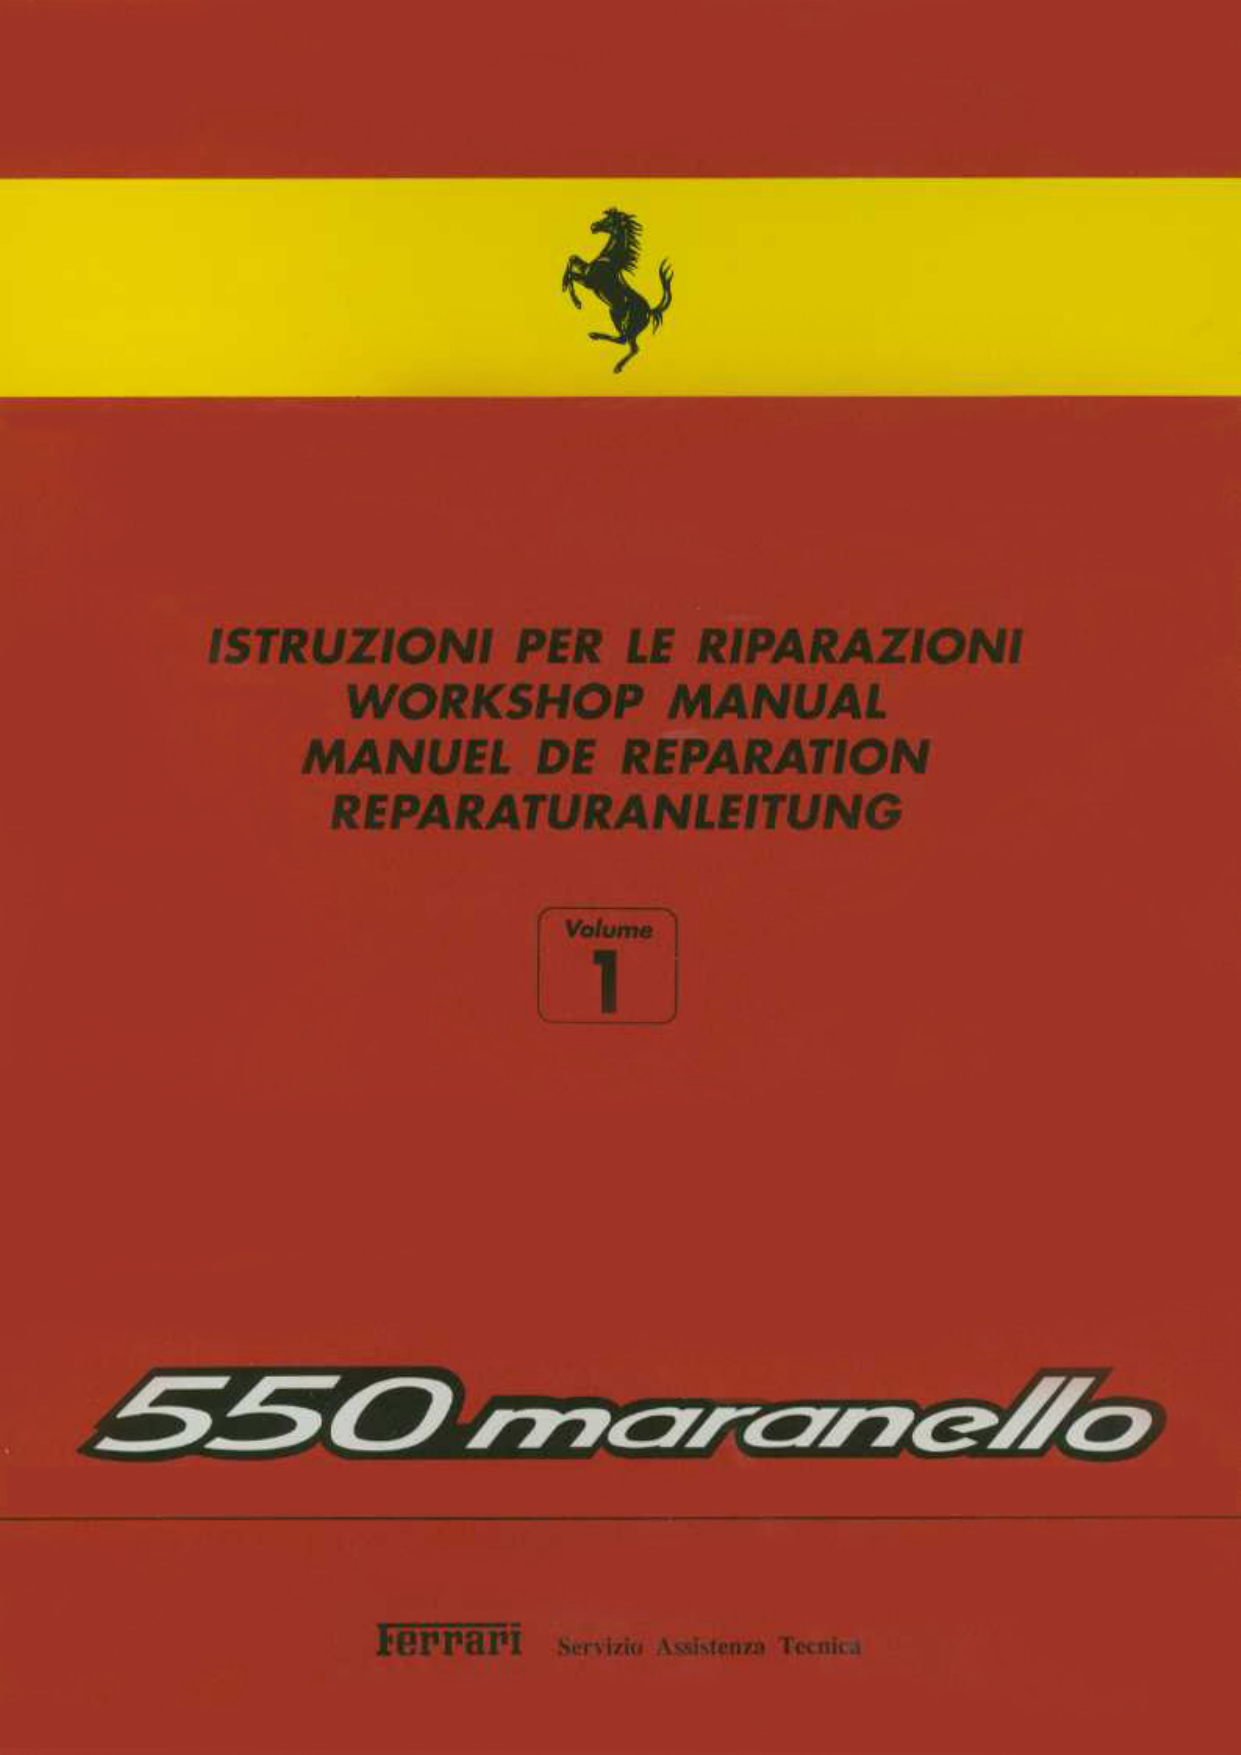 1996-2001 Ferrari 550 Maranello workshop manual Preview image 6